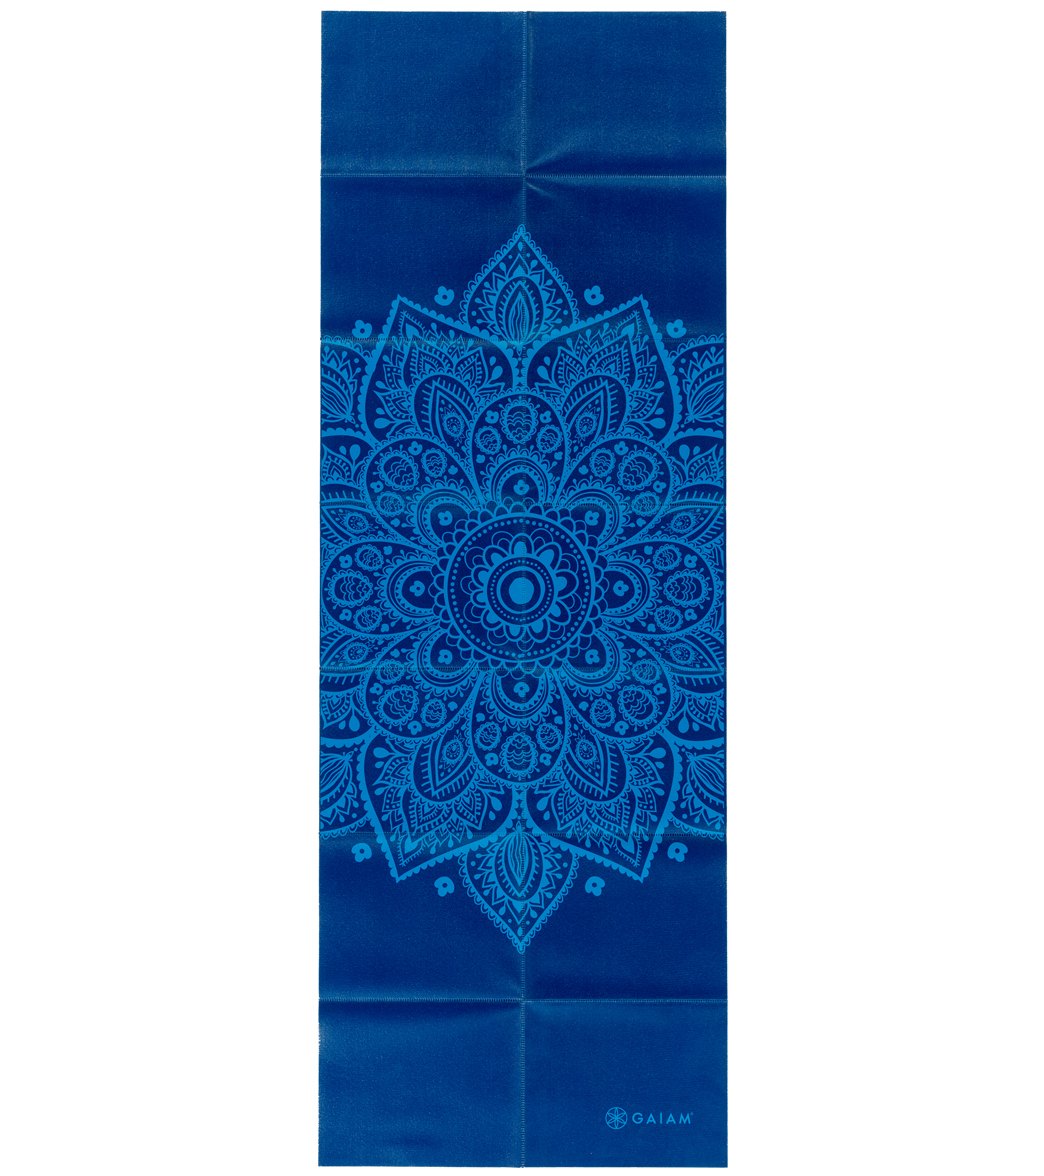 Gaiam Foldable Blue Sundial Printed Yoga Mat 68 2mm